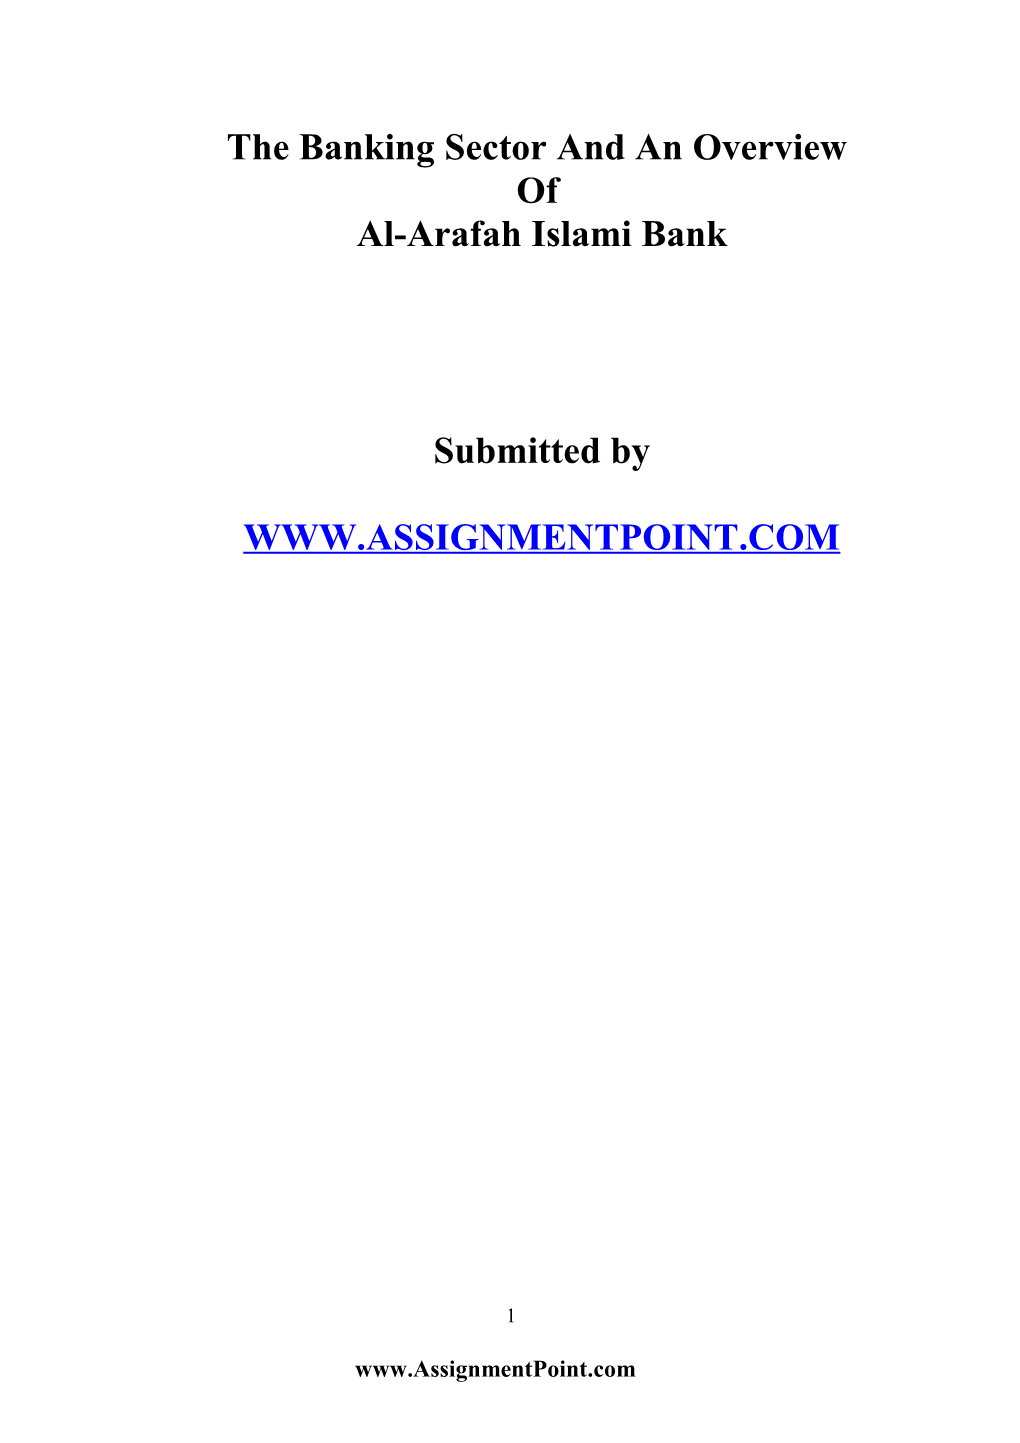 Foundation of Islamic Banking